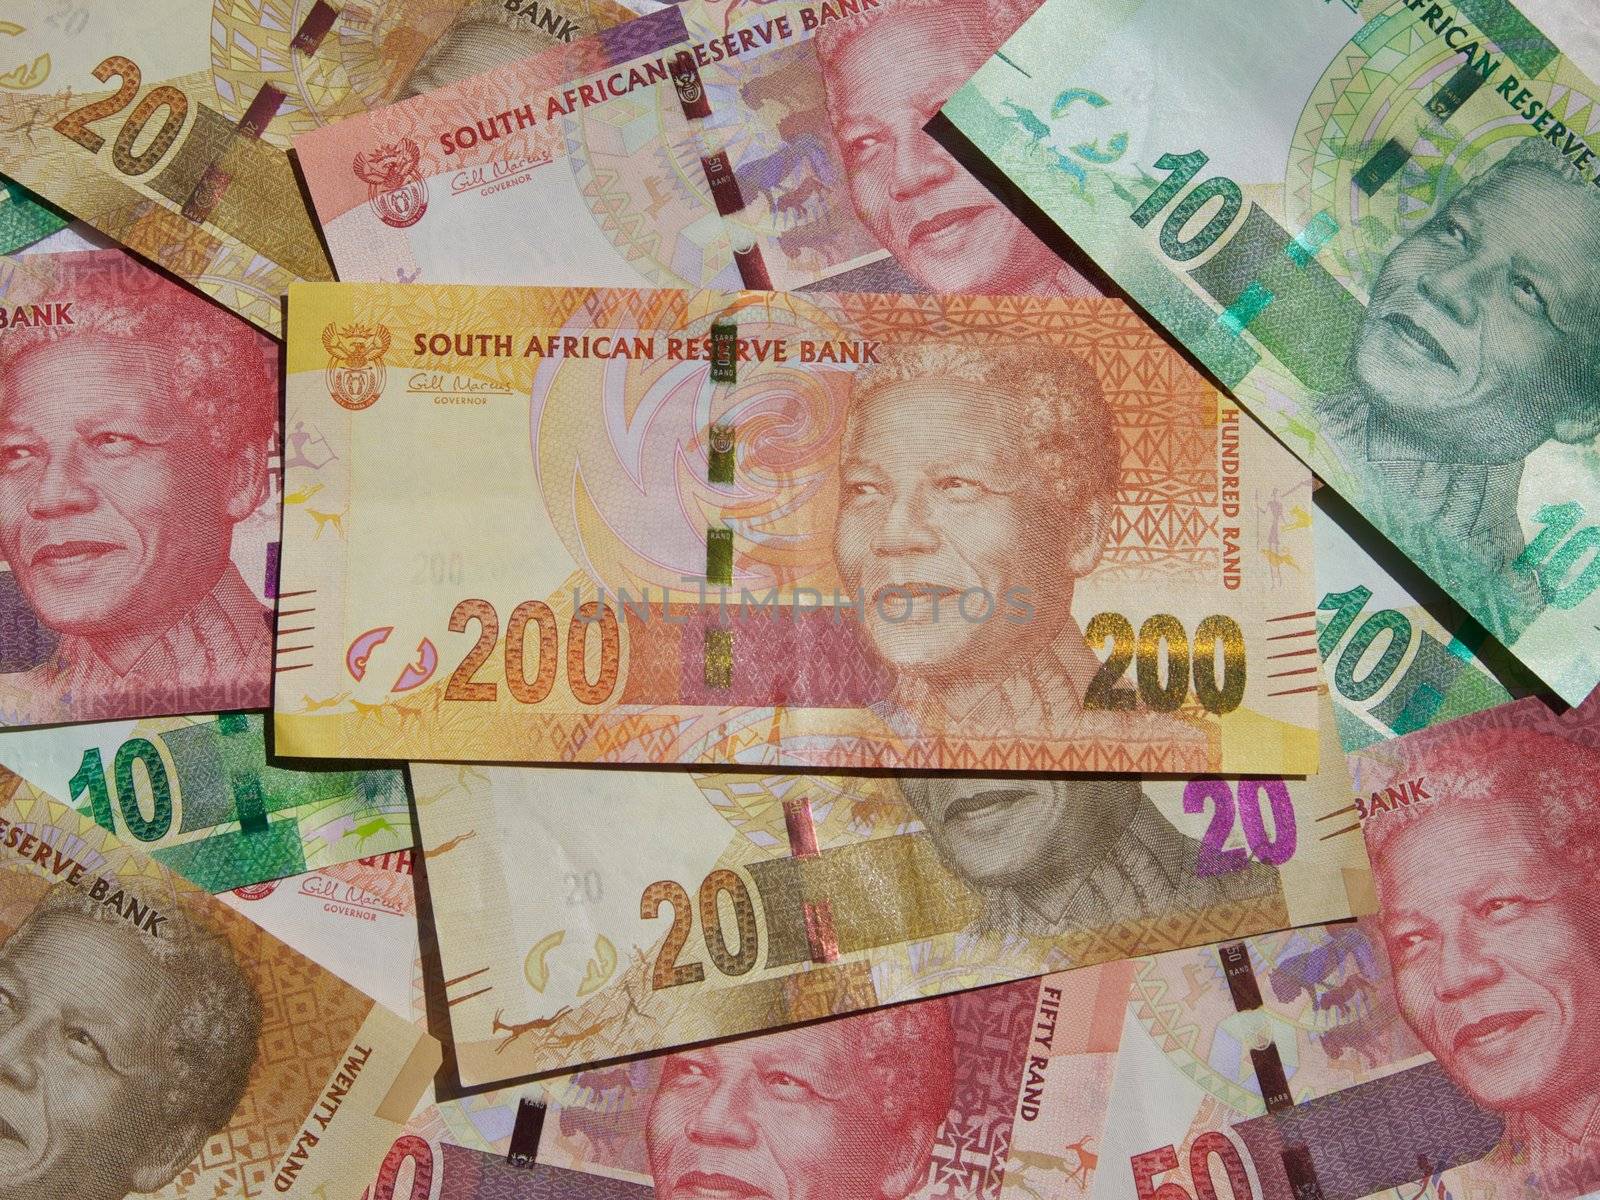 Nelson Mandela new bank notes printed November 2012, South Africa